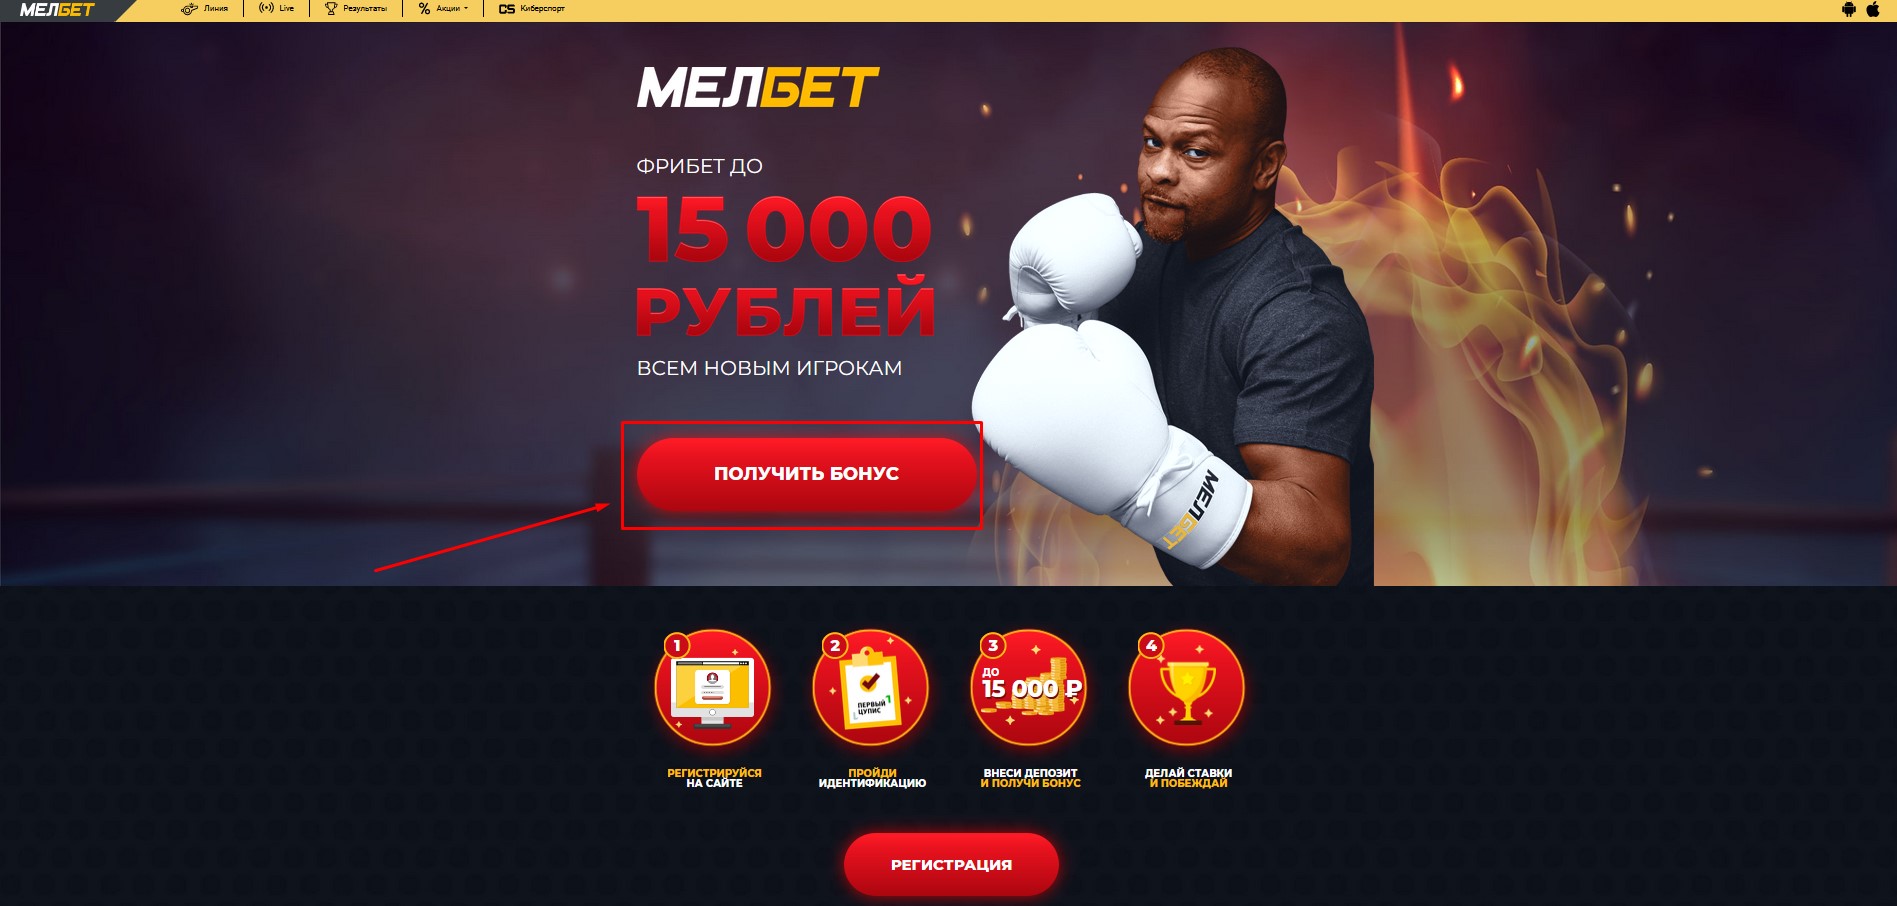 Меобет бонус 15000 рублей